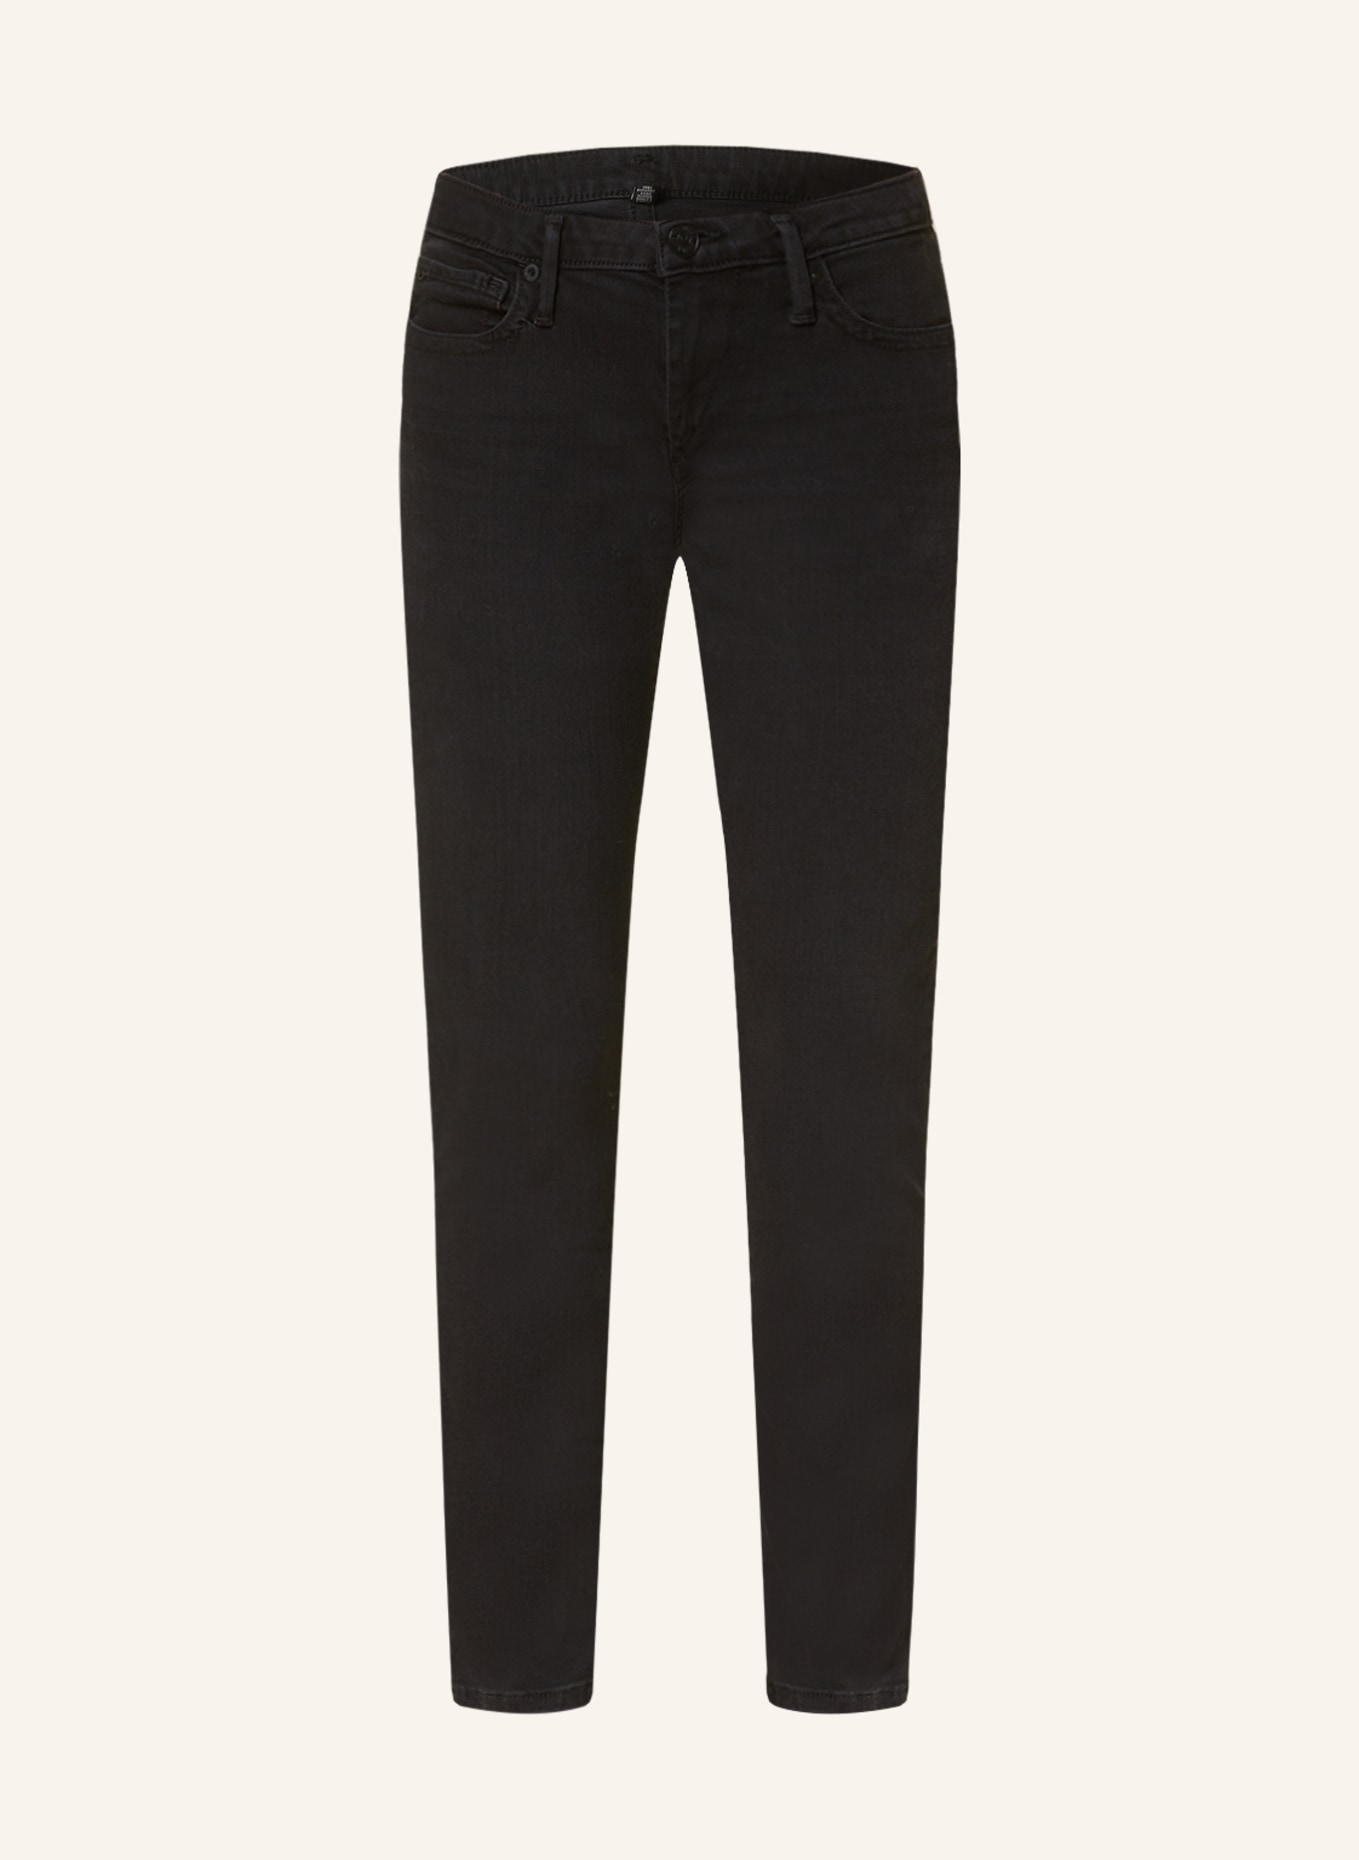 TRUE RELIGION Skinny Jeans CORA, Farbe: 1001 black washed (Bild 1)